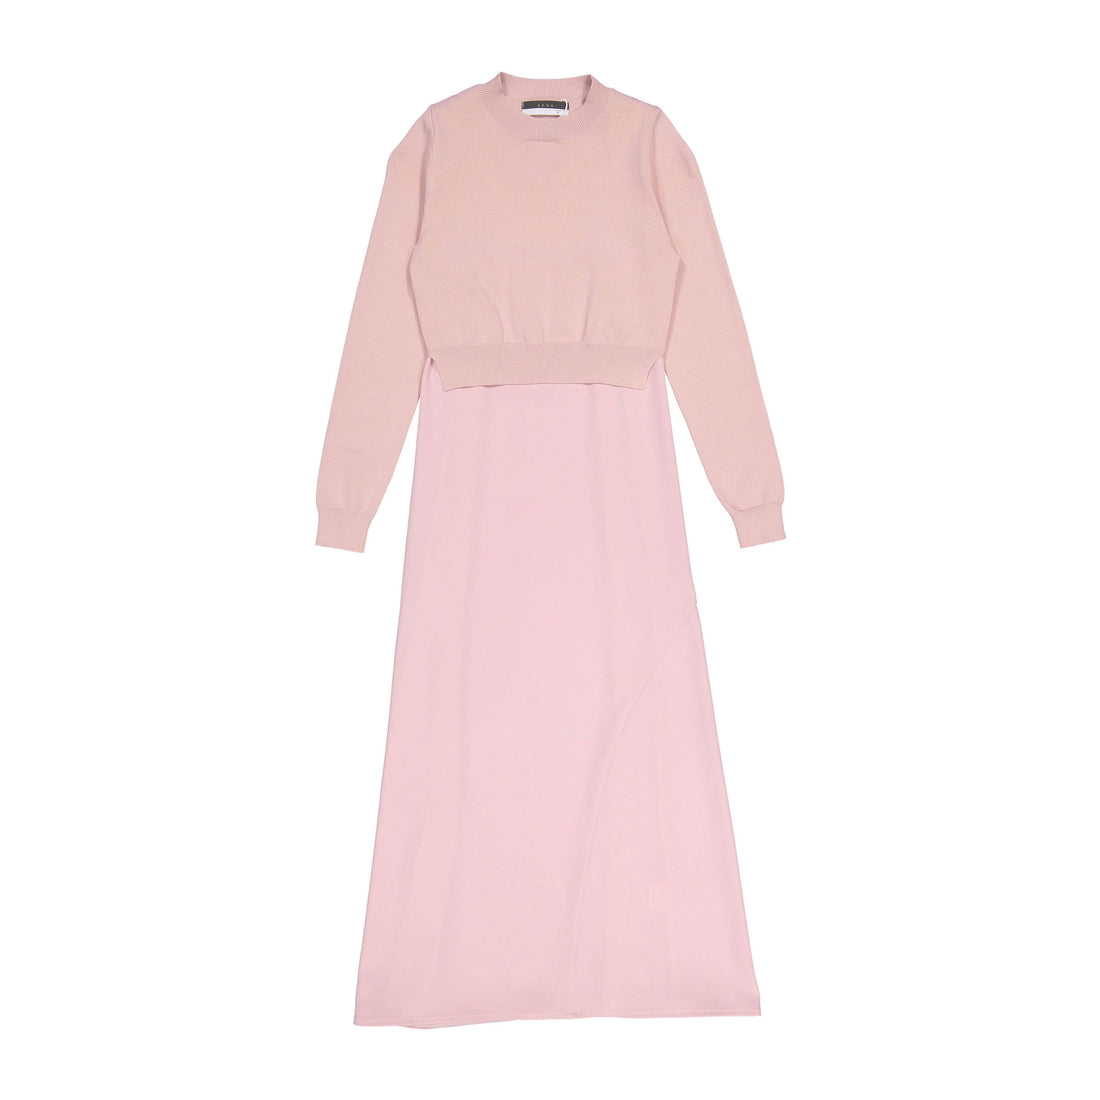 ROWE Light Pink Slip Dress Set